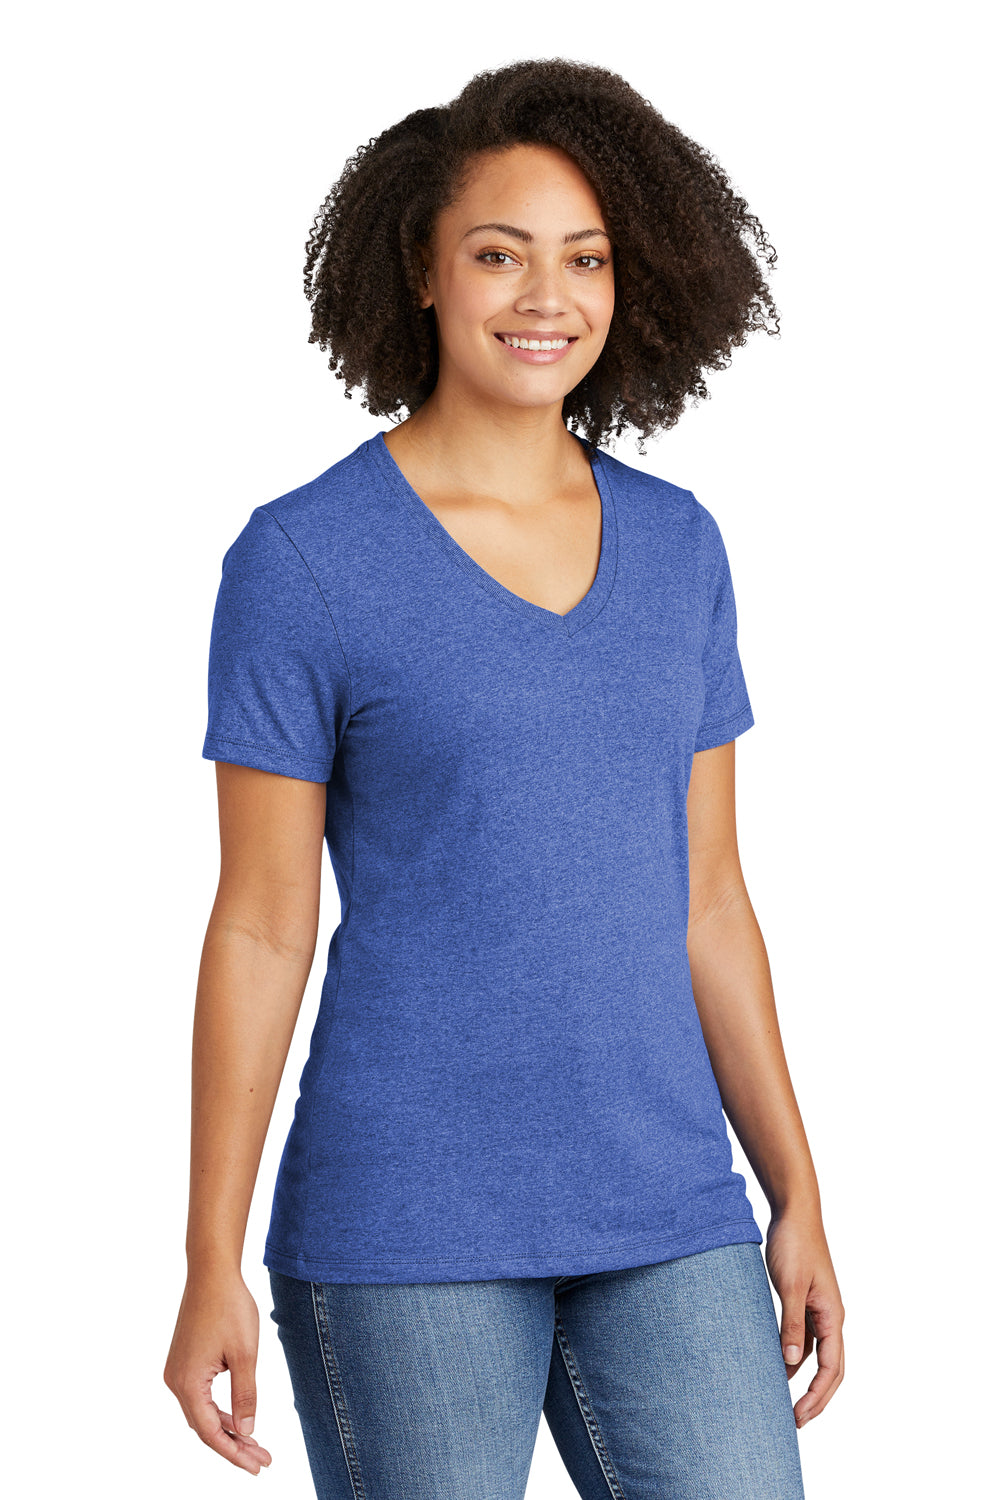 Allmade AL2303 Womens Recycled Short Sleeve V-Neck T-Shirt Heather Royal Blue Model 3Q